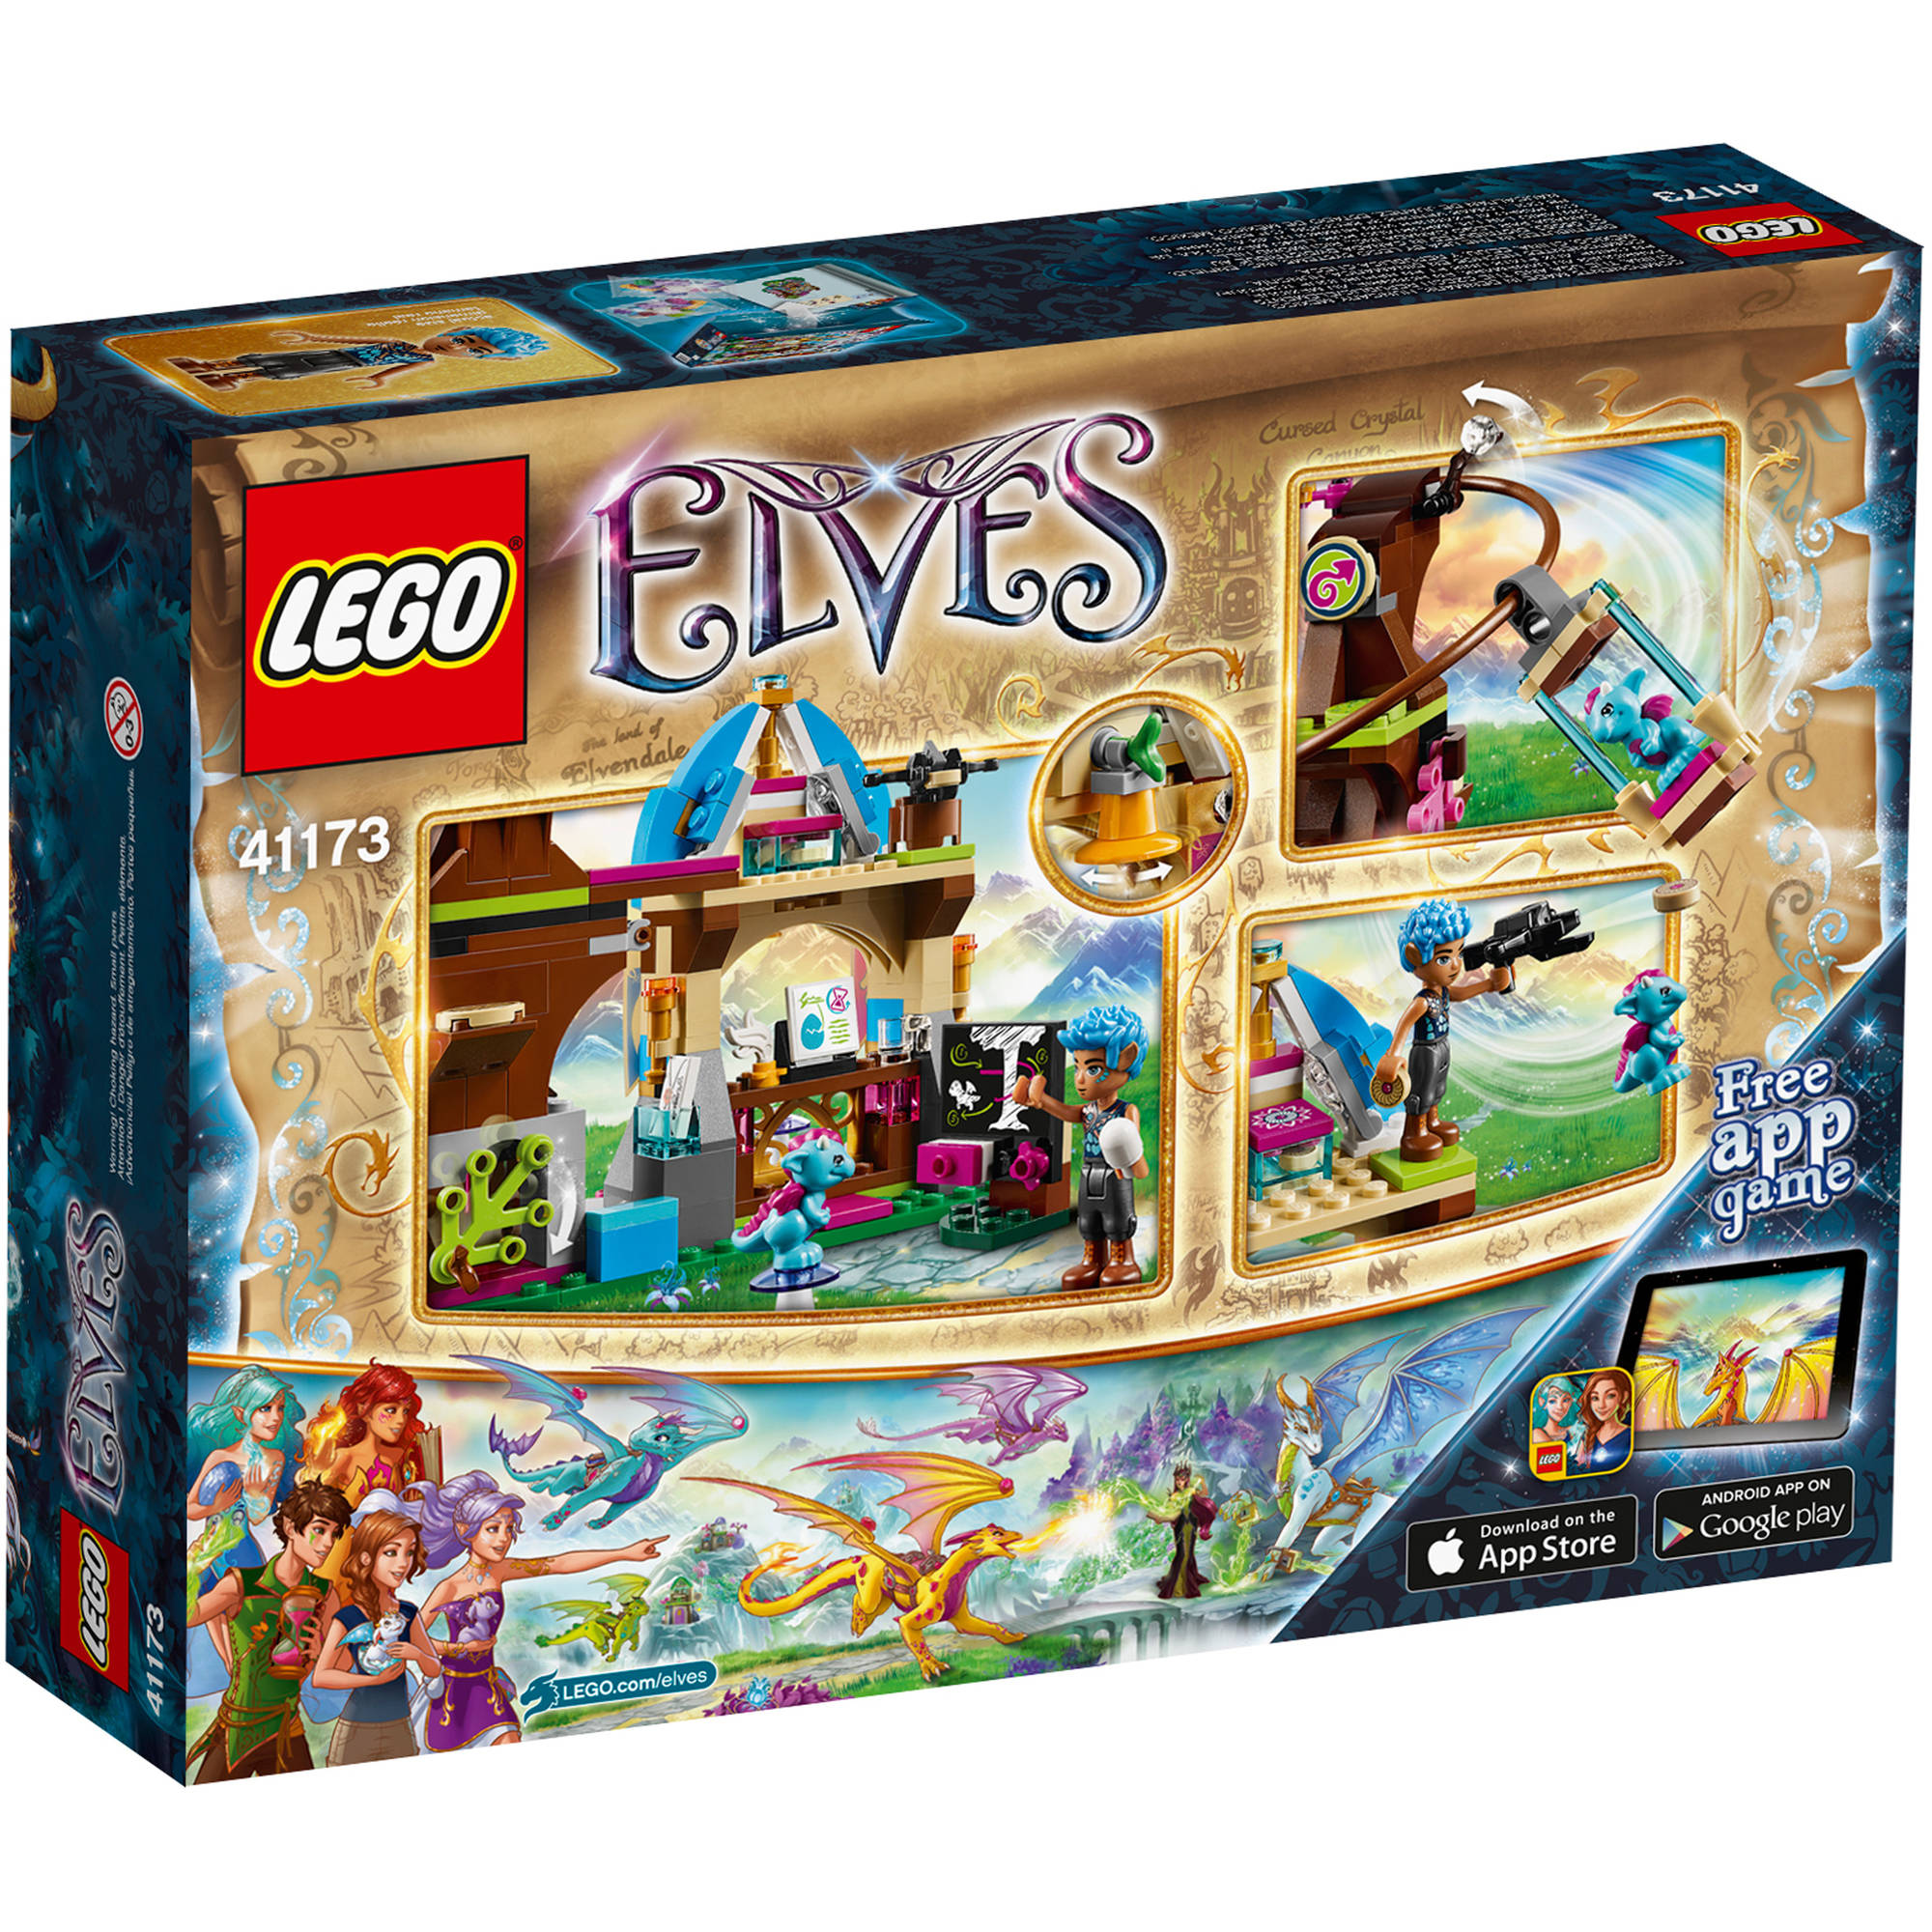 LEGO Elves Elvendale School of Dragons, 41173 - image 3 of 6